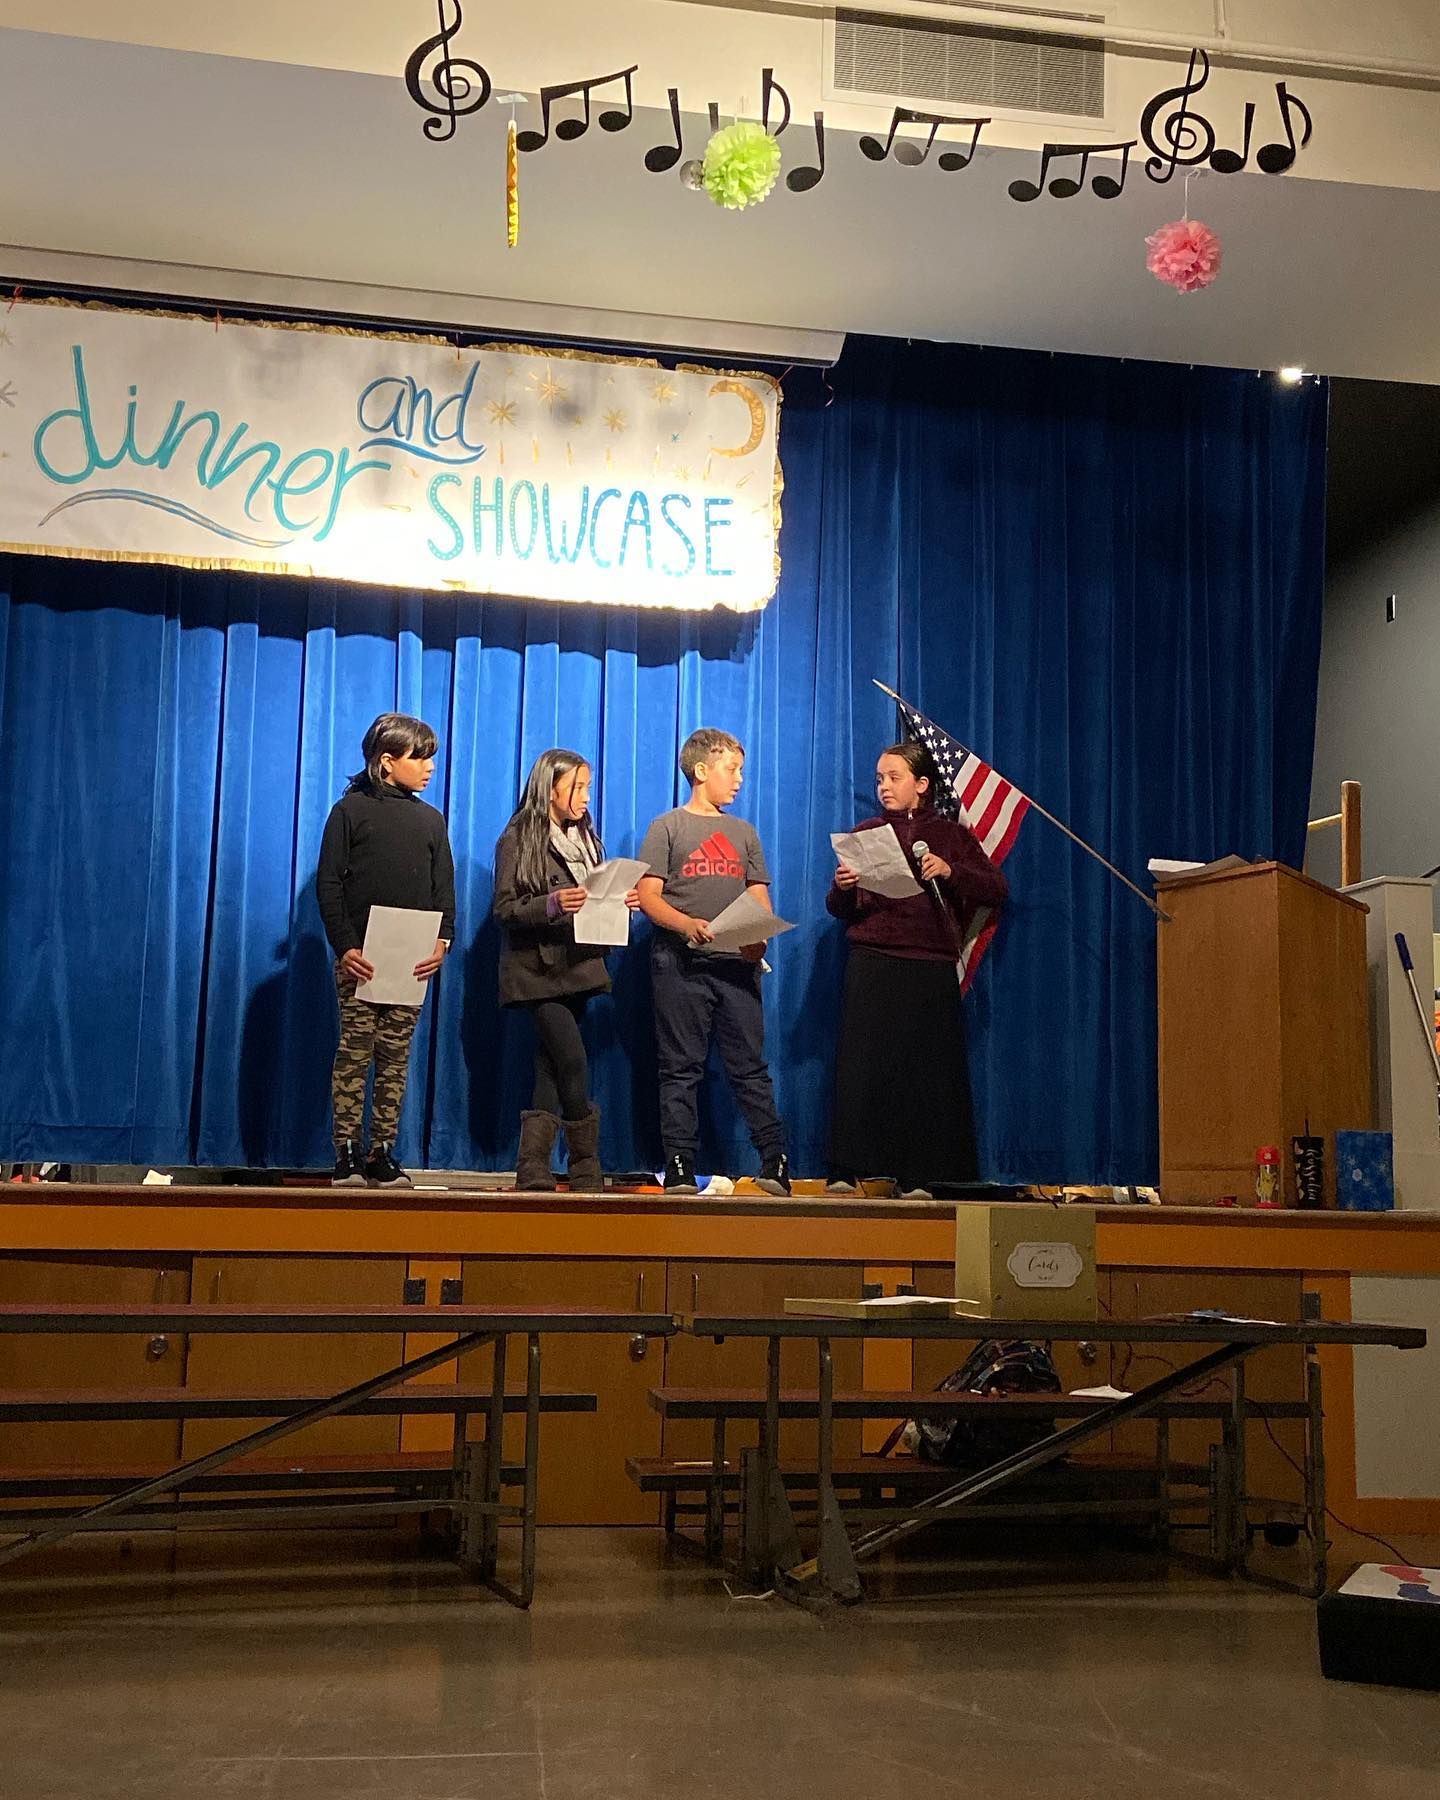 Winter Showcase at Redding Elementary School